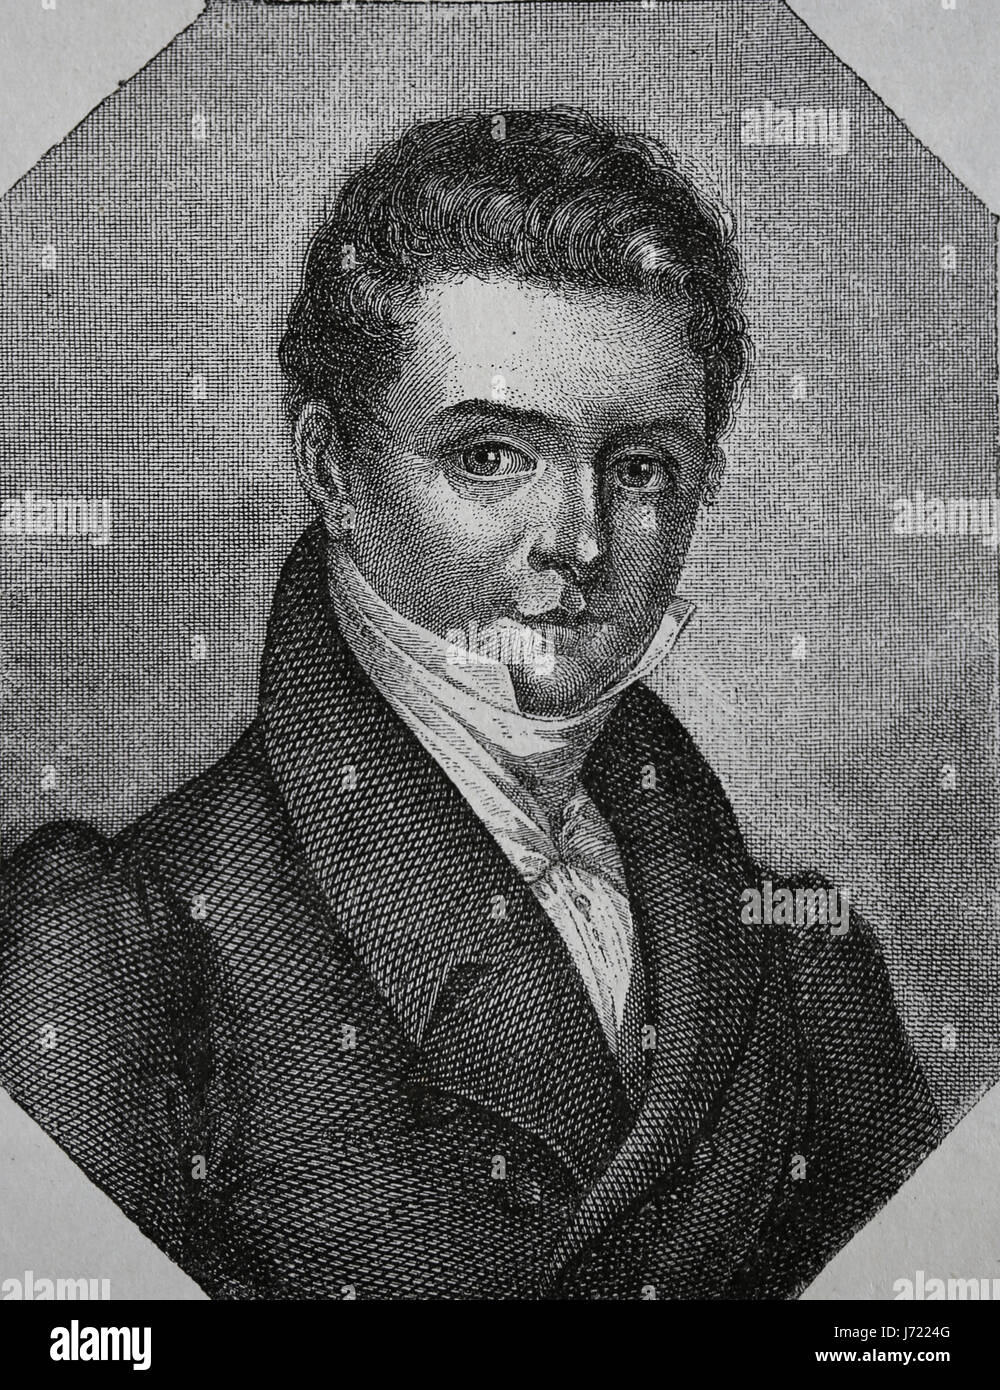 Washington Irving (1783-1859). American writer. Romanticism. Engraving, Our century,1883. Spanish edition. Stock Photo